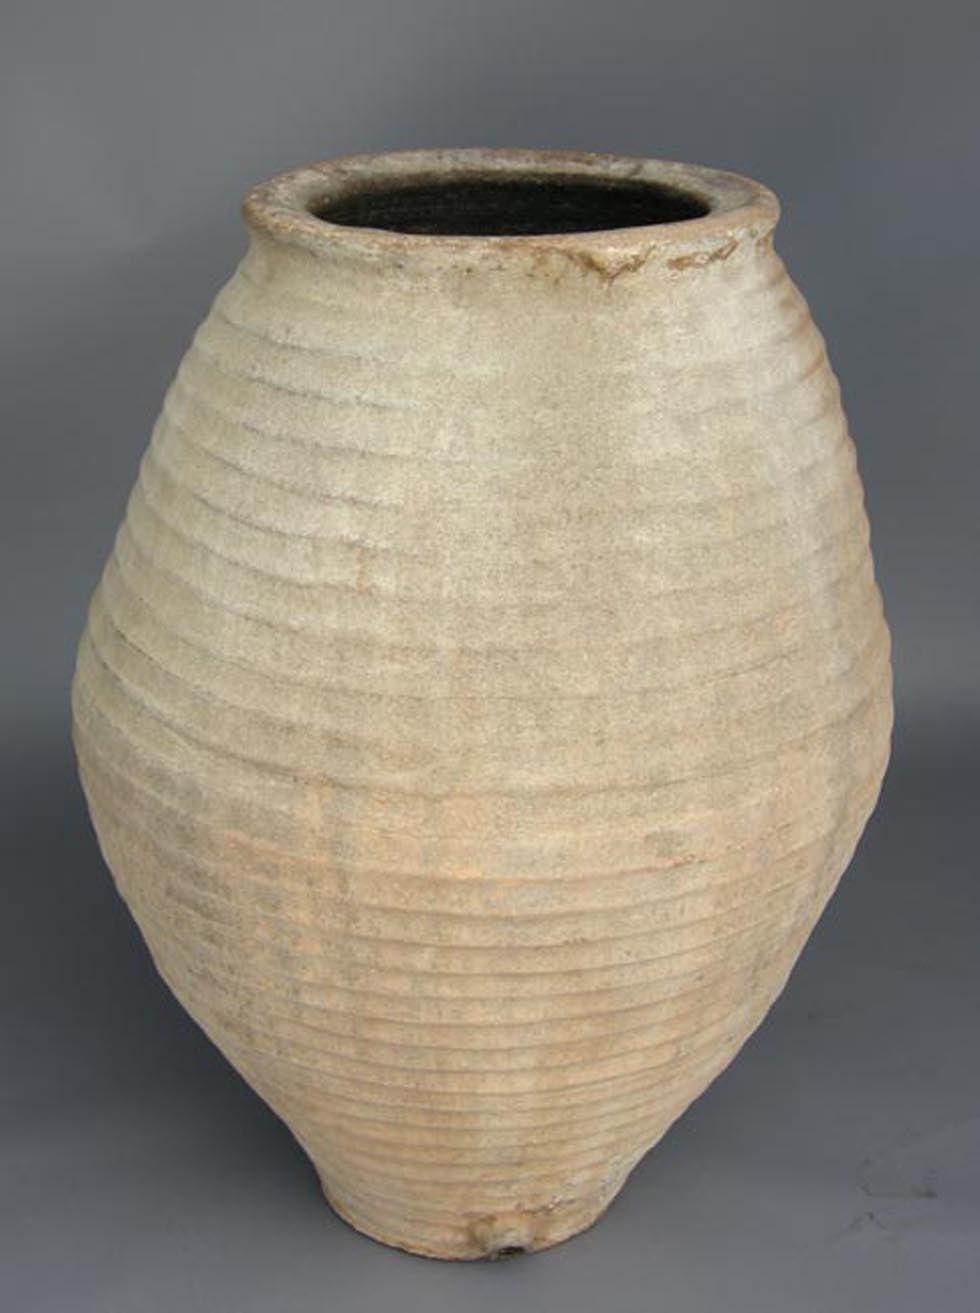 19th century terracotta jar from Spain.